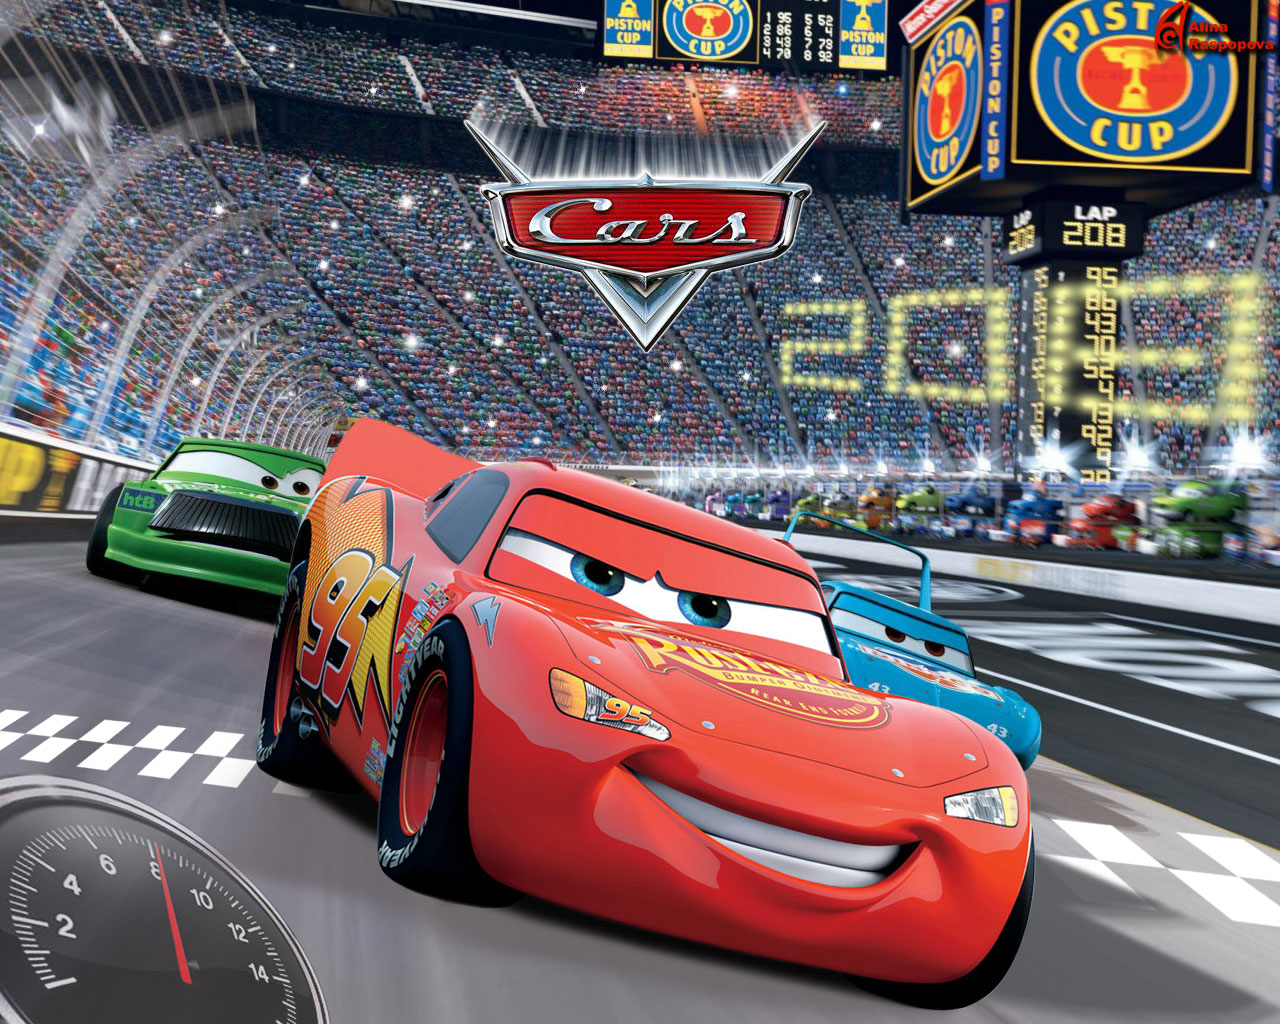 The Cars Movie Wallpaper for Top Desktop | Top Desktop No.1